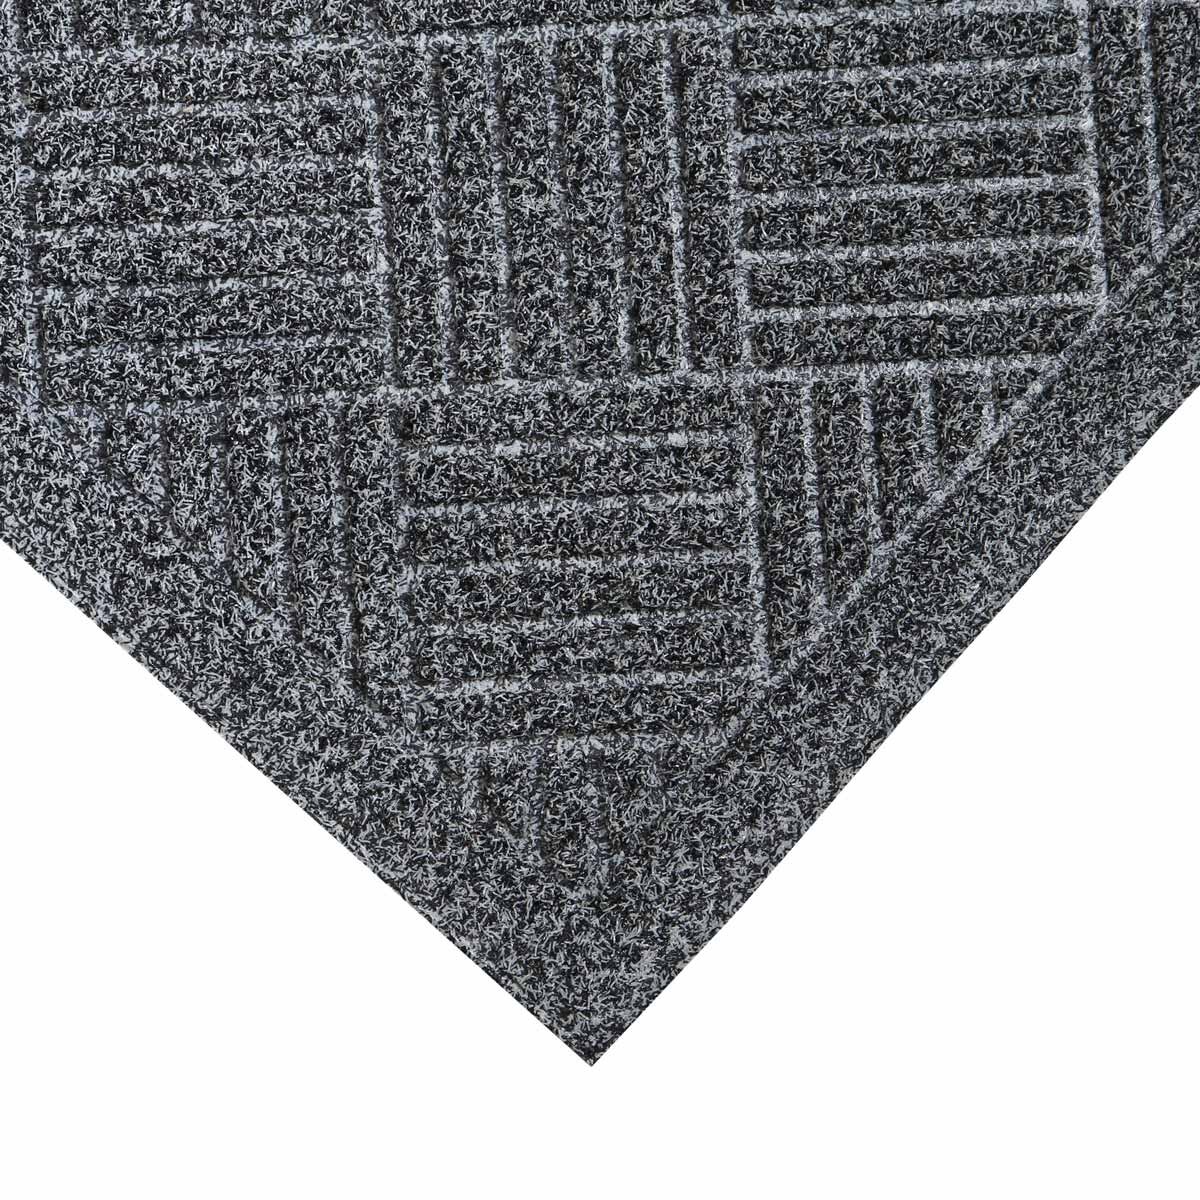 Close up image of mat corner